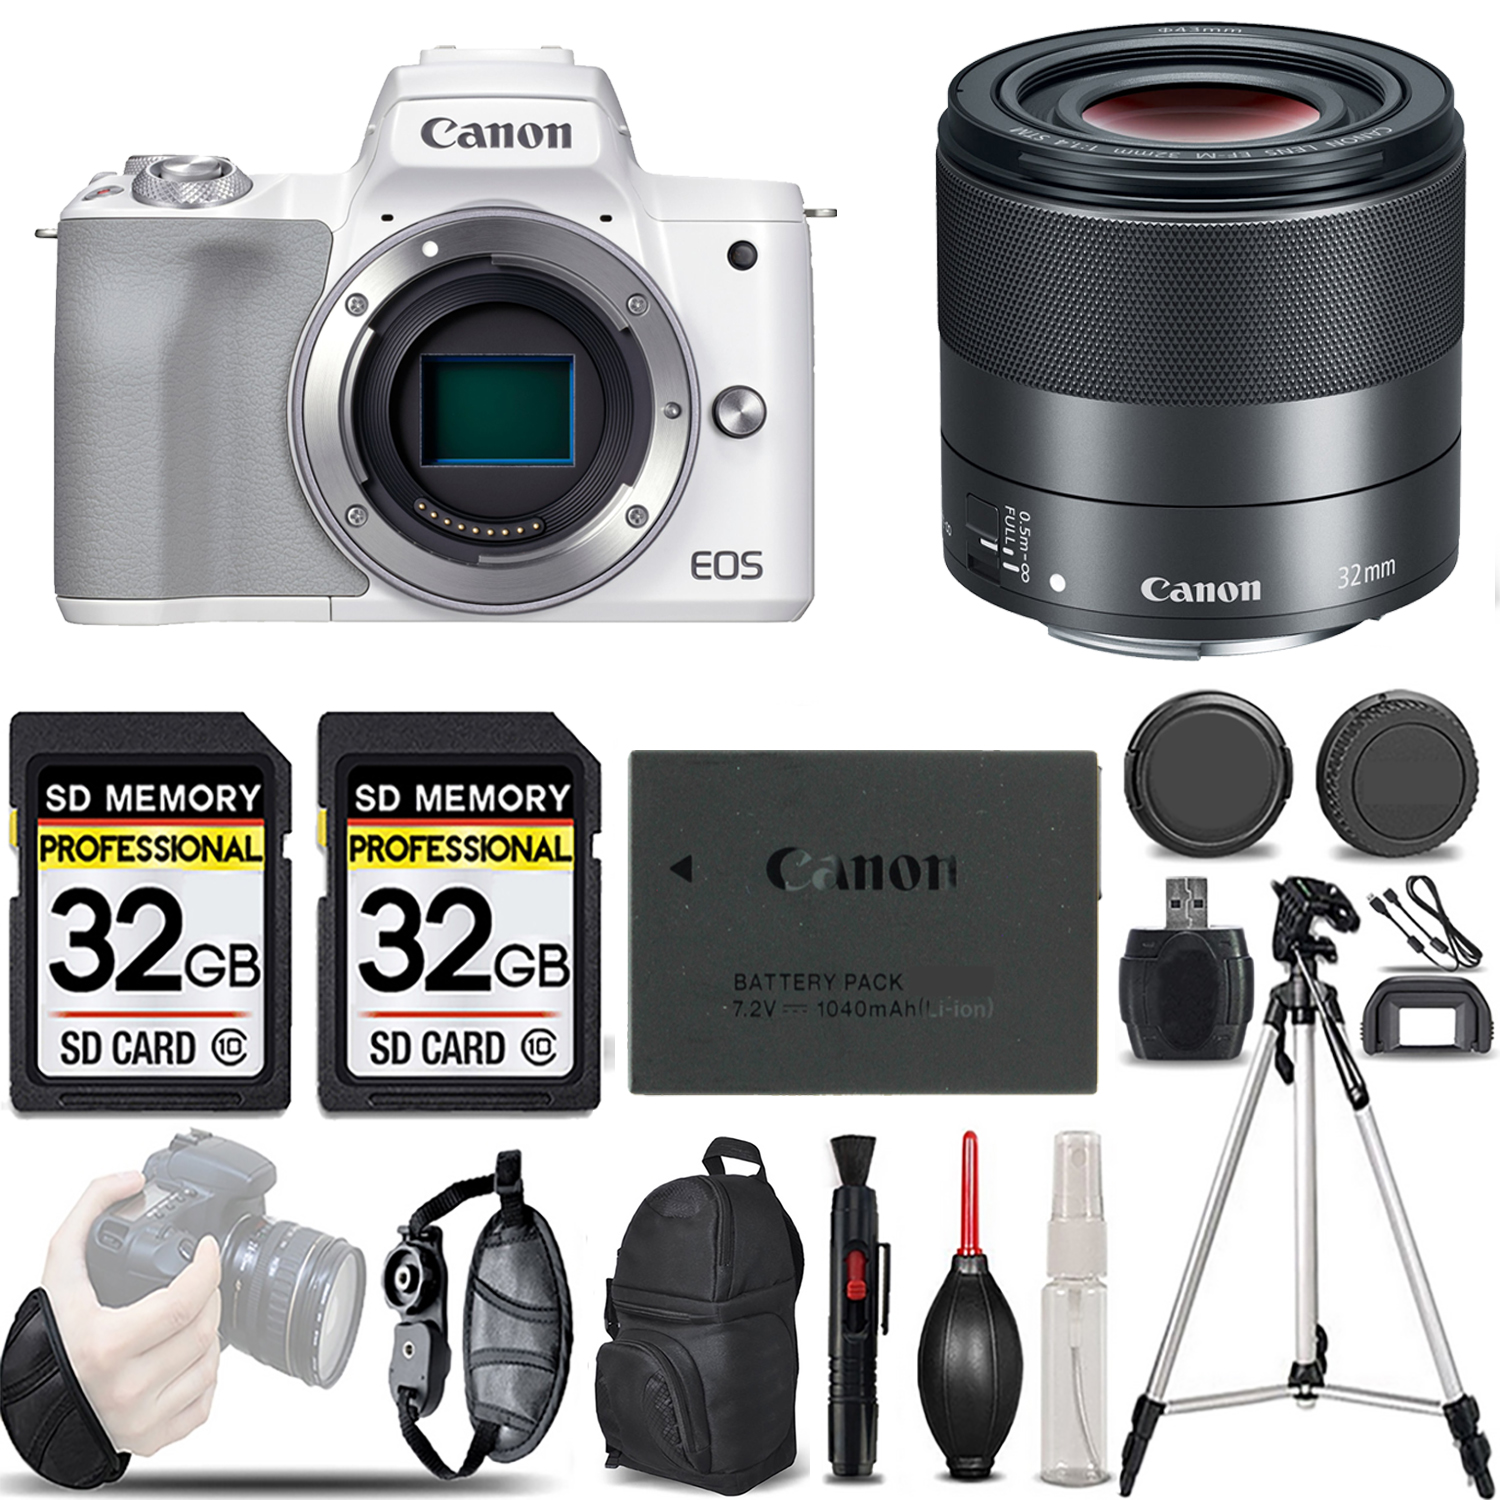 EOS M50 Mark II Camera (White) + 32mm f/1.4 STM Lens - LOADED KIT *FREE SHIPPING*